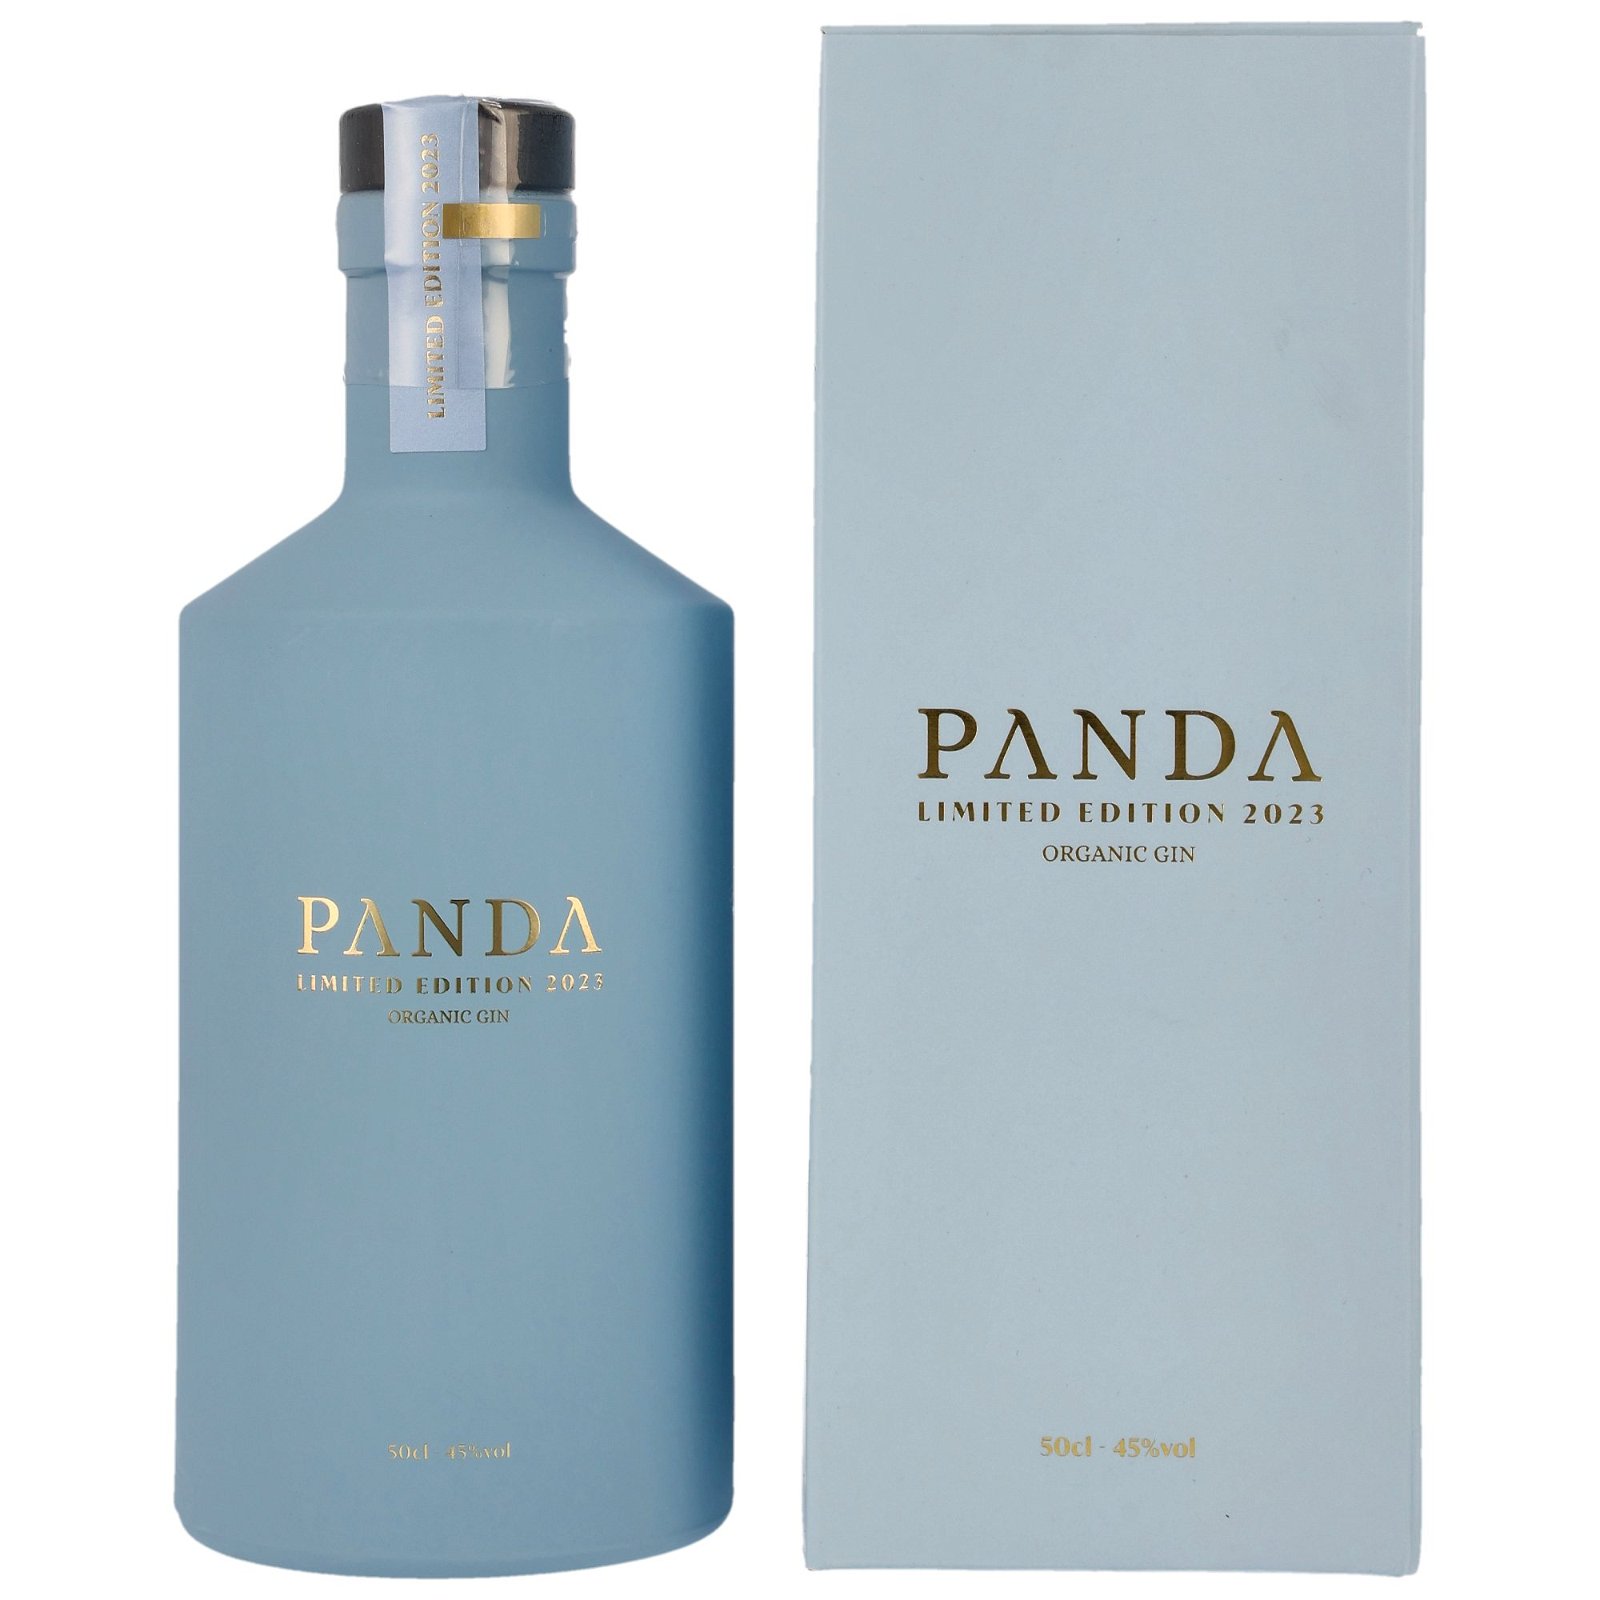 Panda Organic Gin Limited Edition 2023 (Bio)